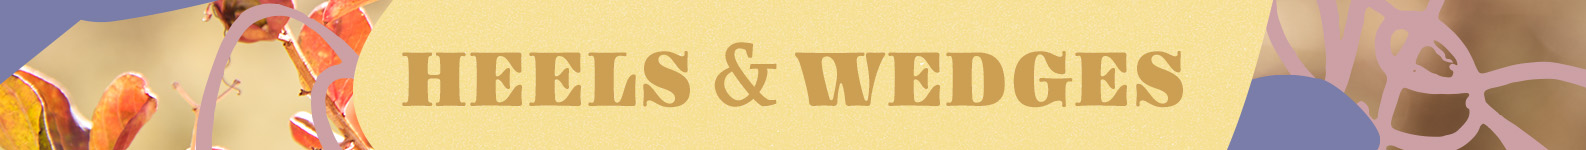 Heels and Wedges brand header image